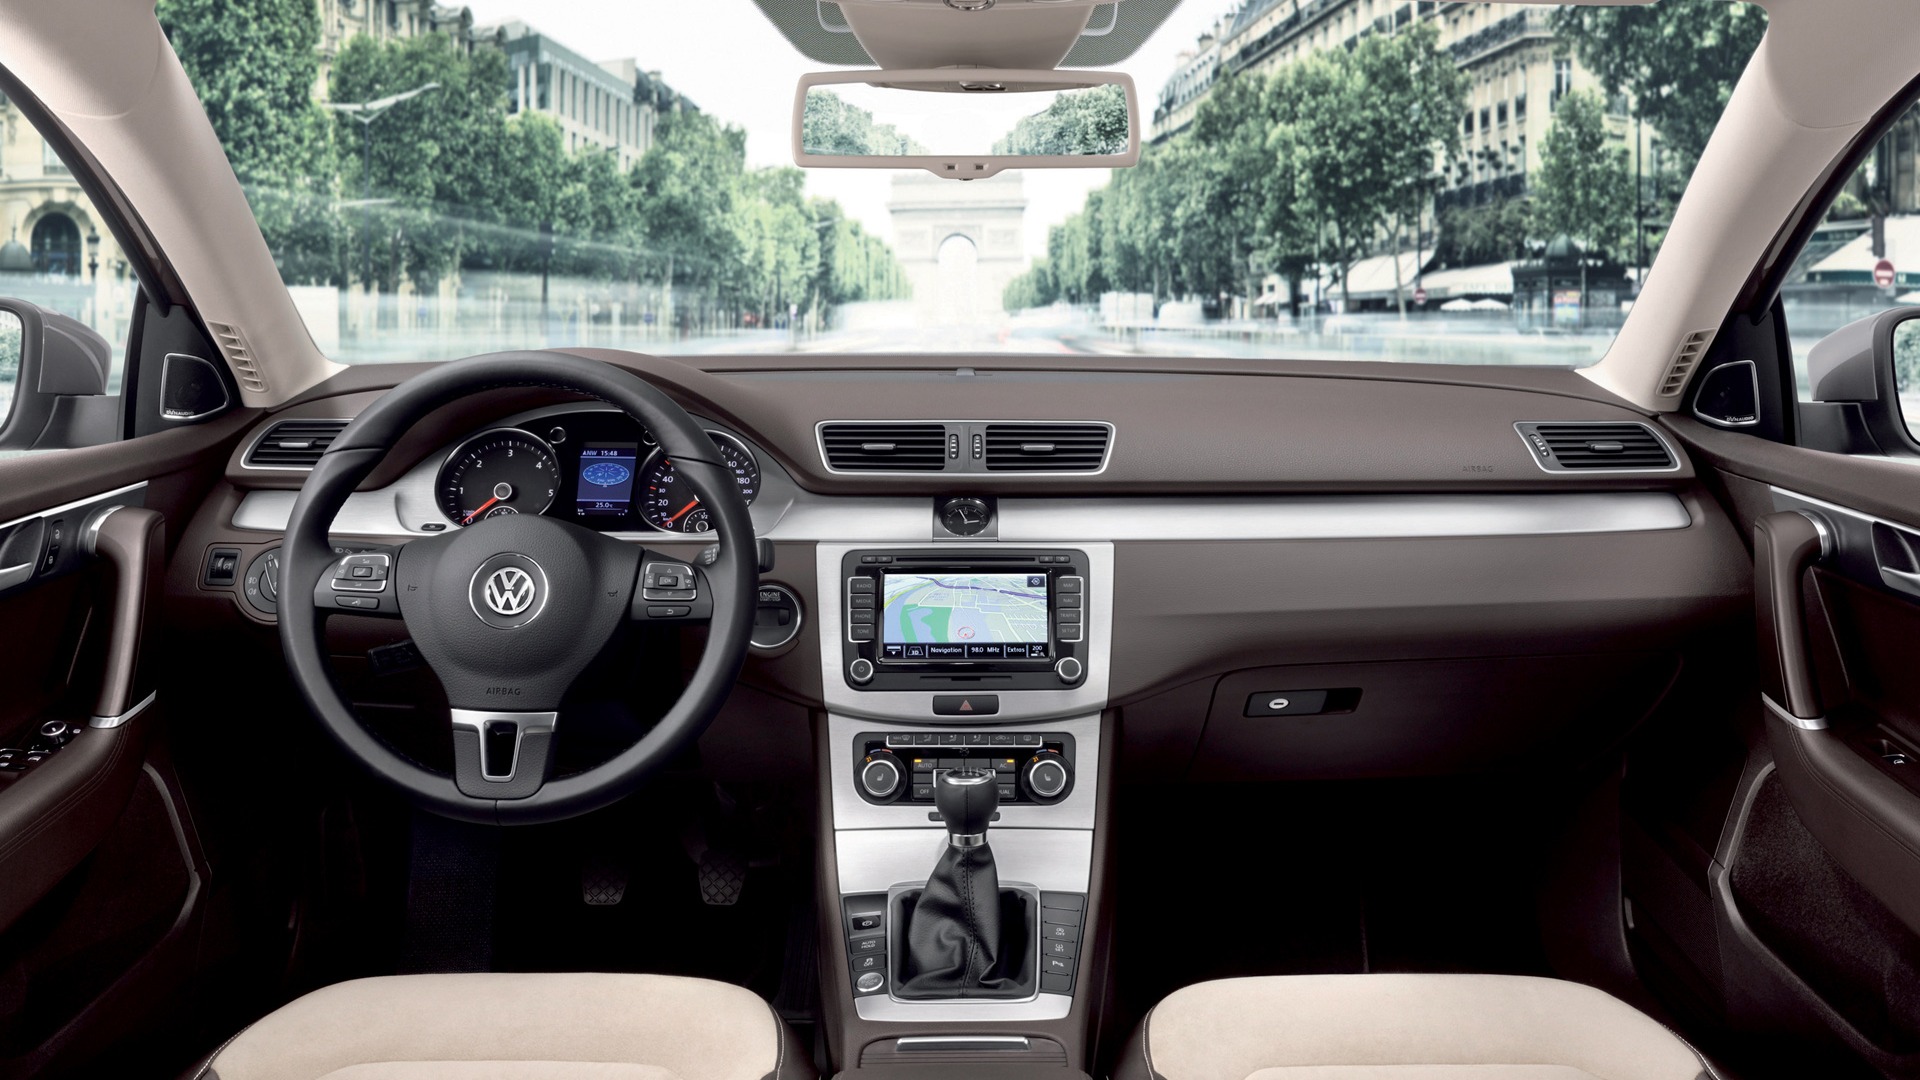 Volkswagen Passat - 2010 fonds d'écran HD #9 - 1920x1080